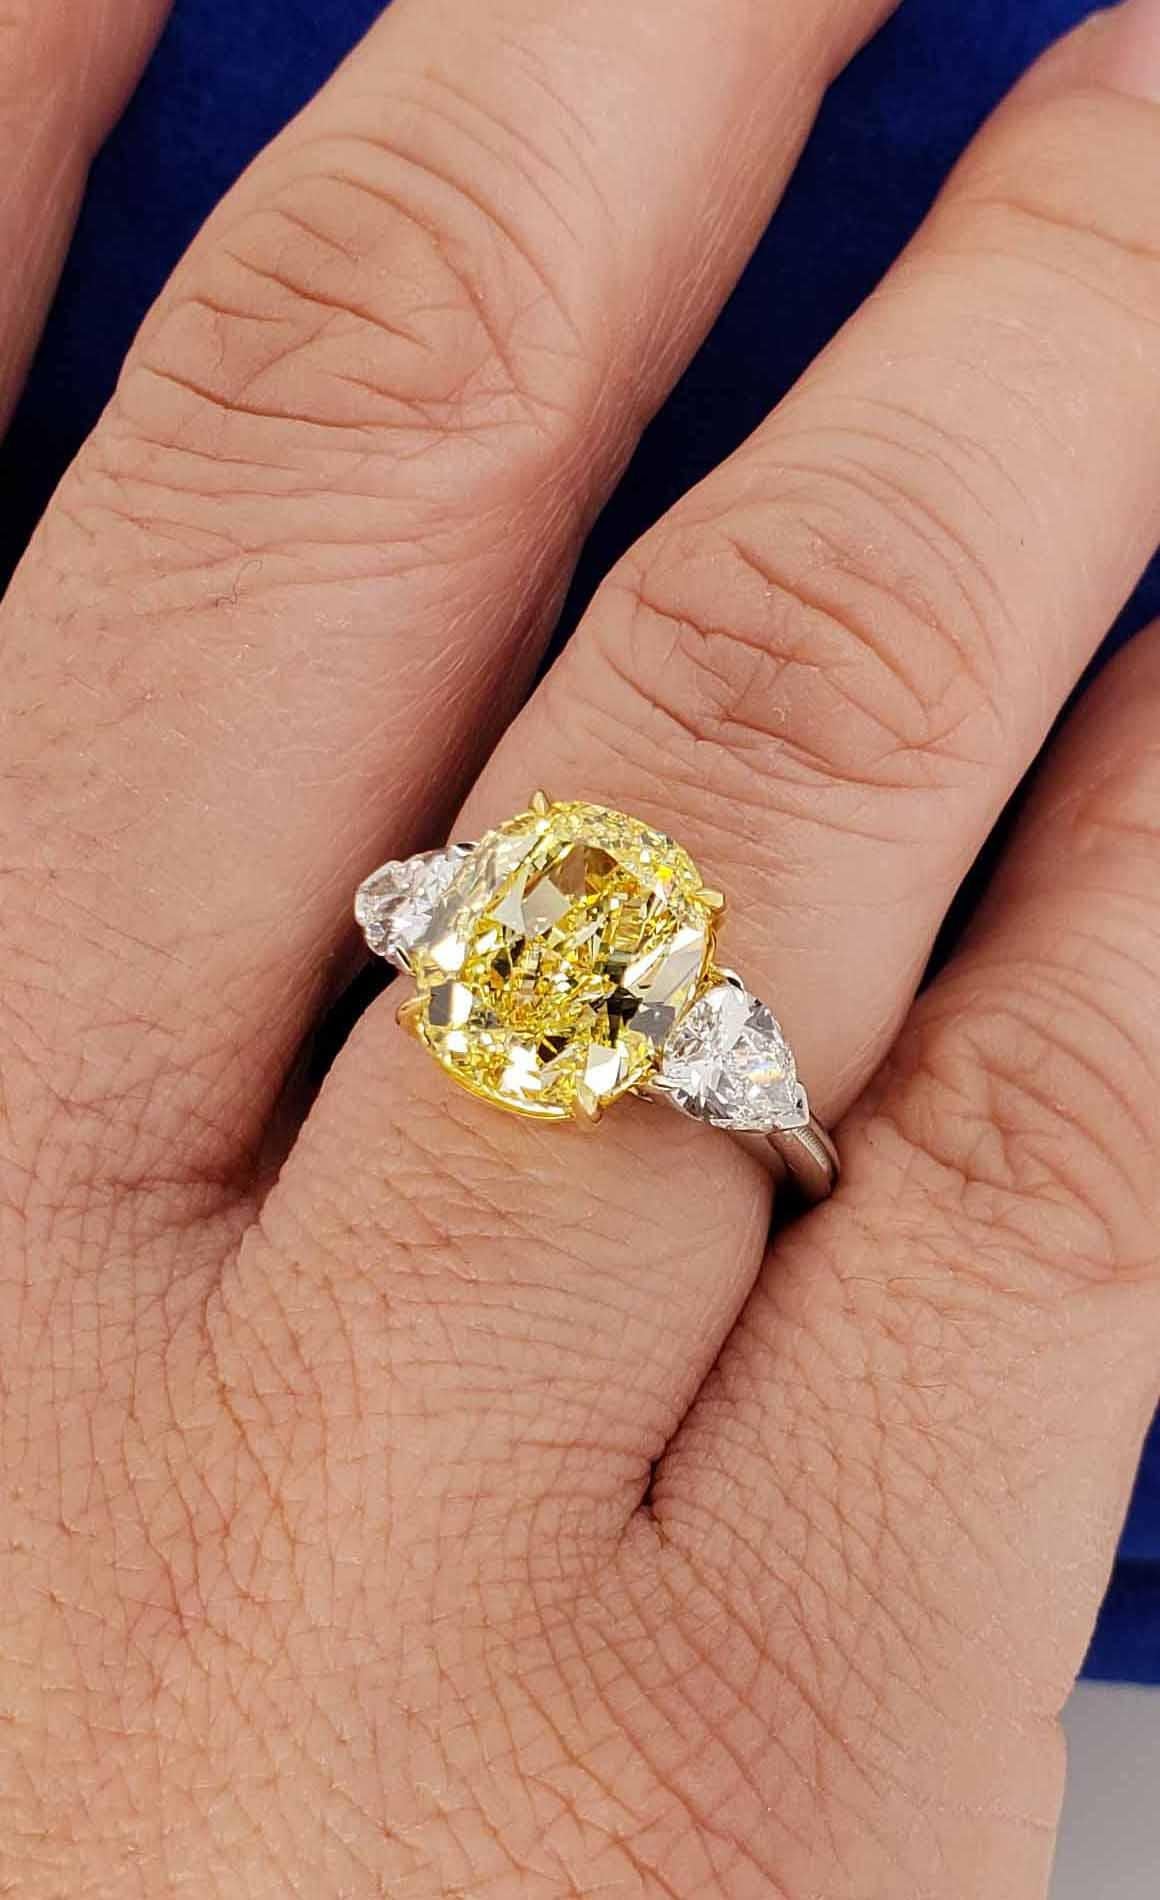 Scarselli 5.68 Carat Fancy Intense Yellow Cushion Cut Diamond Ring in Platinum 5